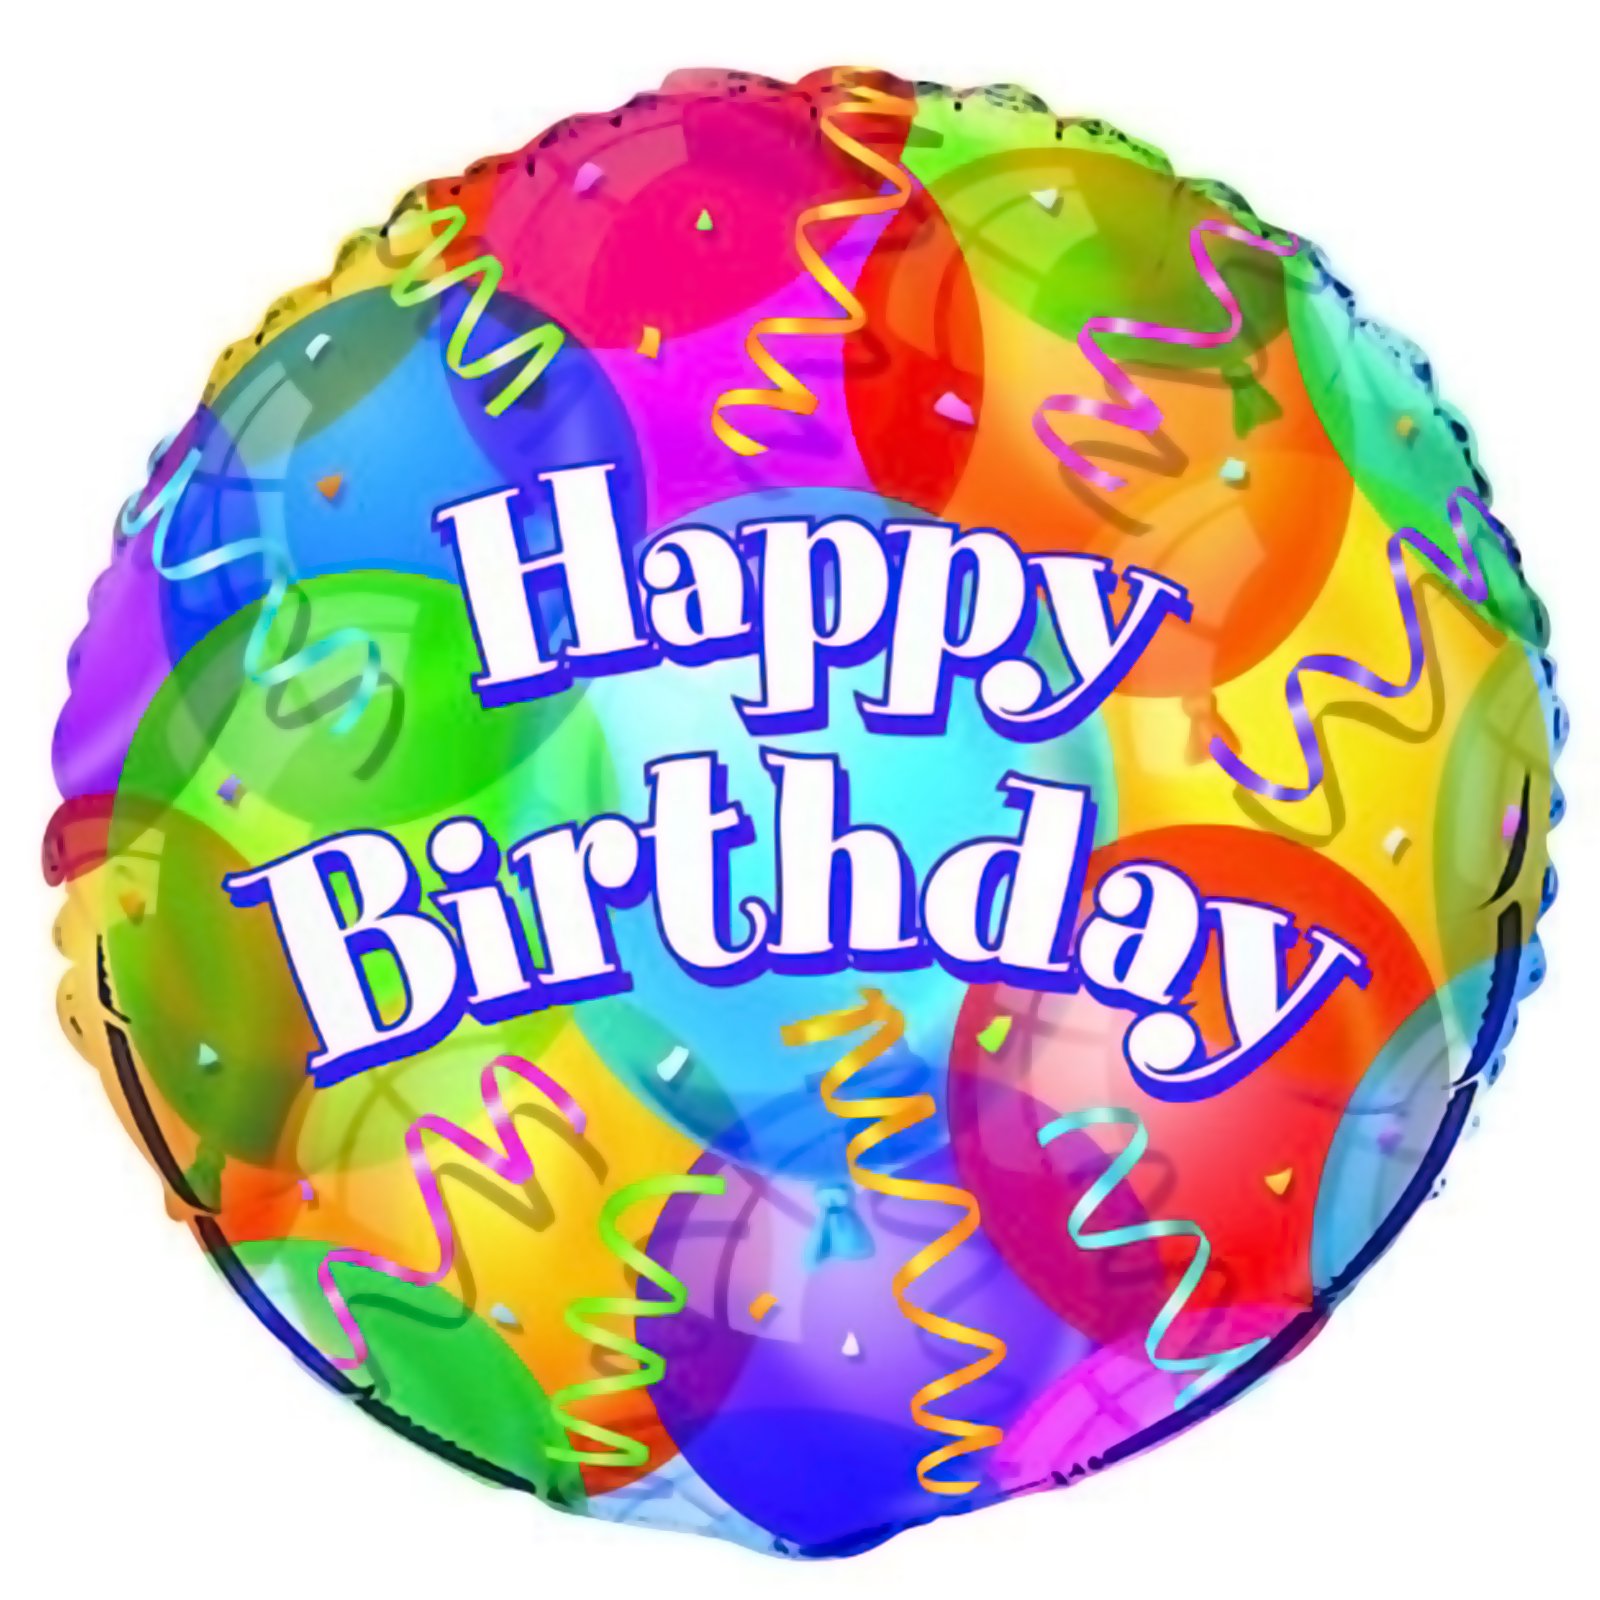 Brilliant Birthday 18" Foil Balloon